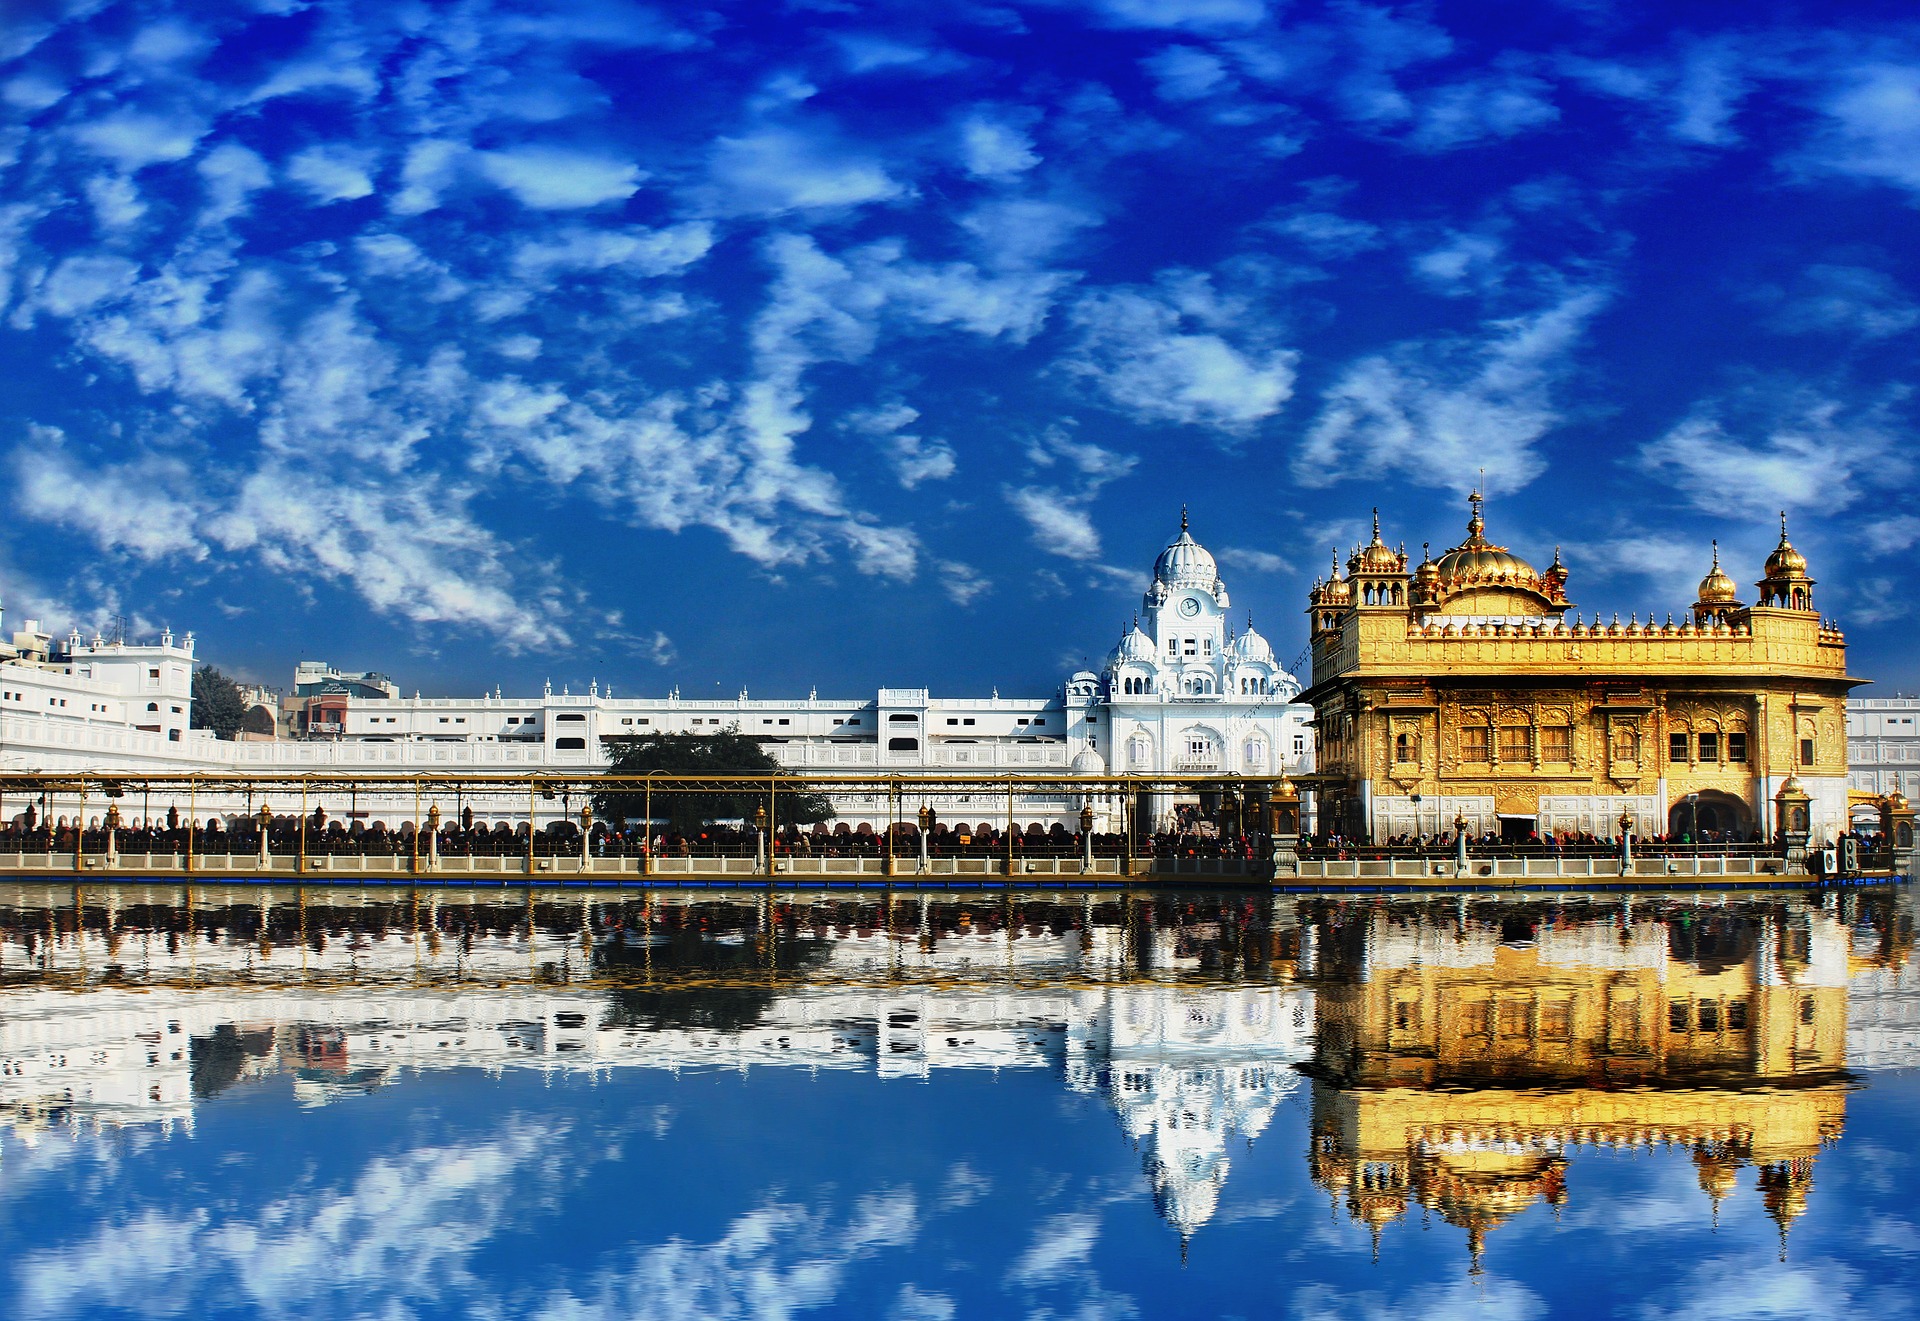 Explore Amritsar like a local - Travel Begins With Savaari